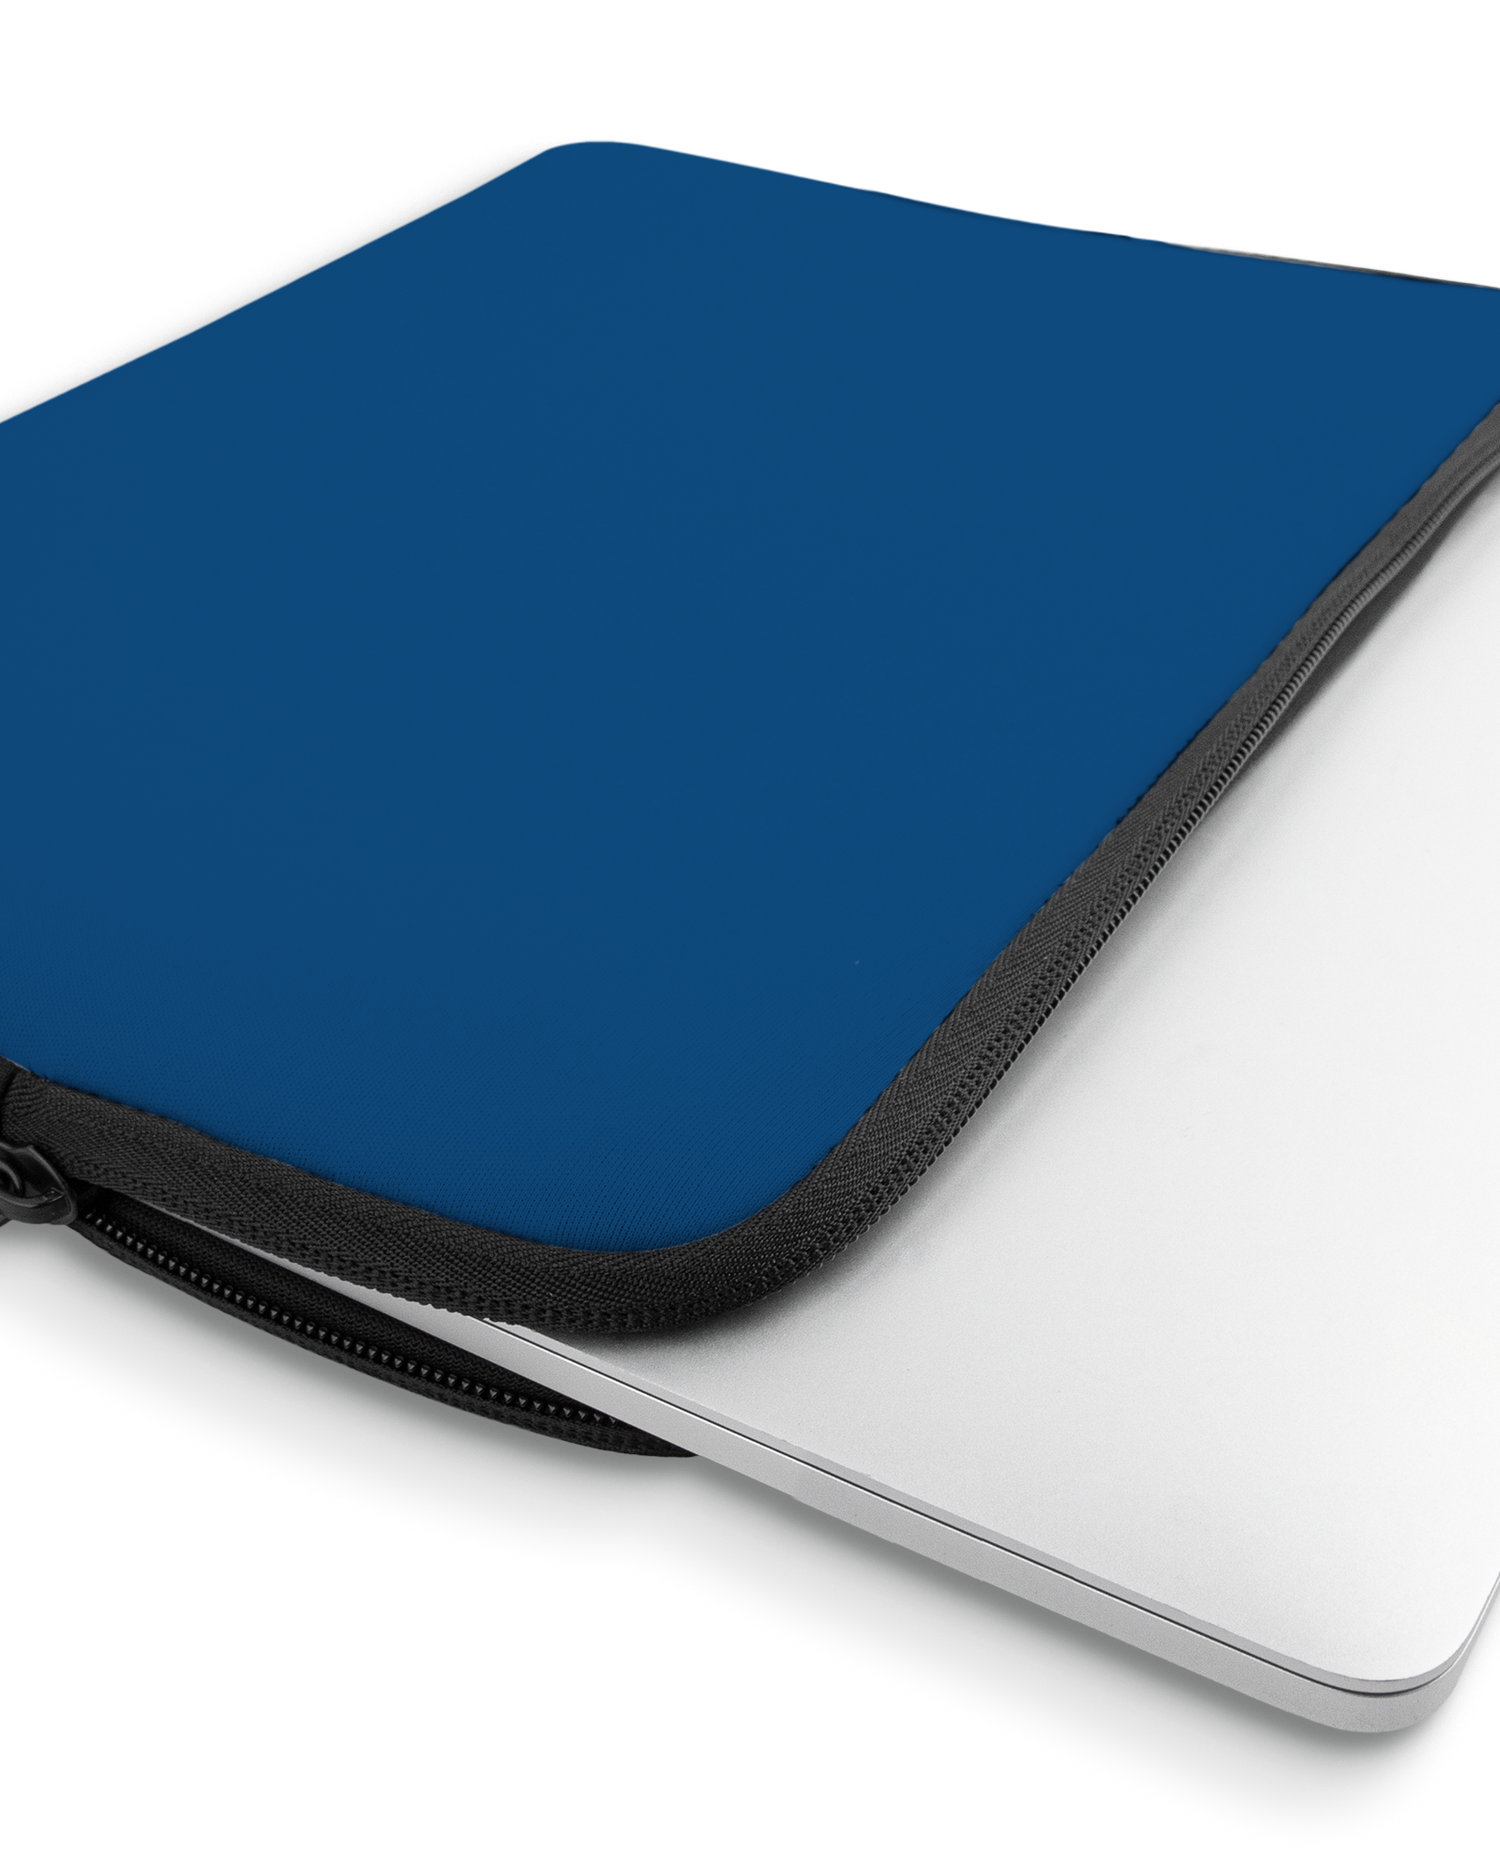 CLASSIC BLUE Laptophülle 13 Zoll mit Gerät im Inneren